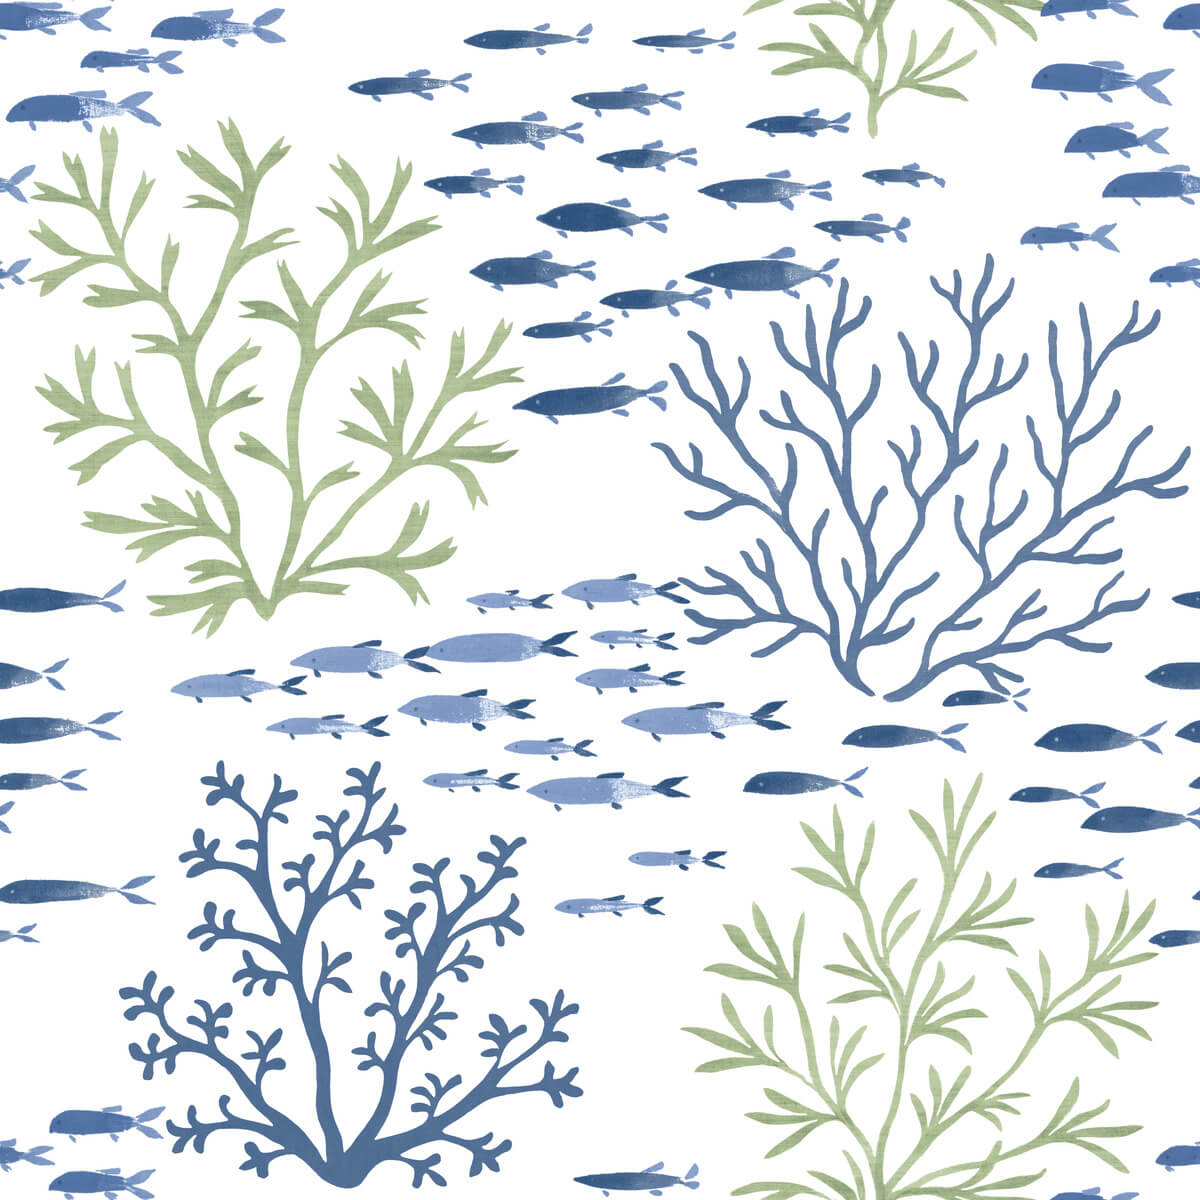 Waters Edge Resource Library Marine Garden Wallpaper - SAMPLE